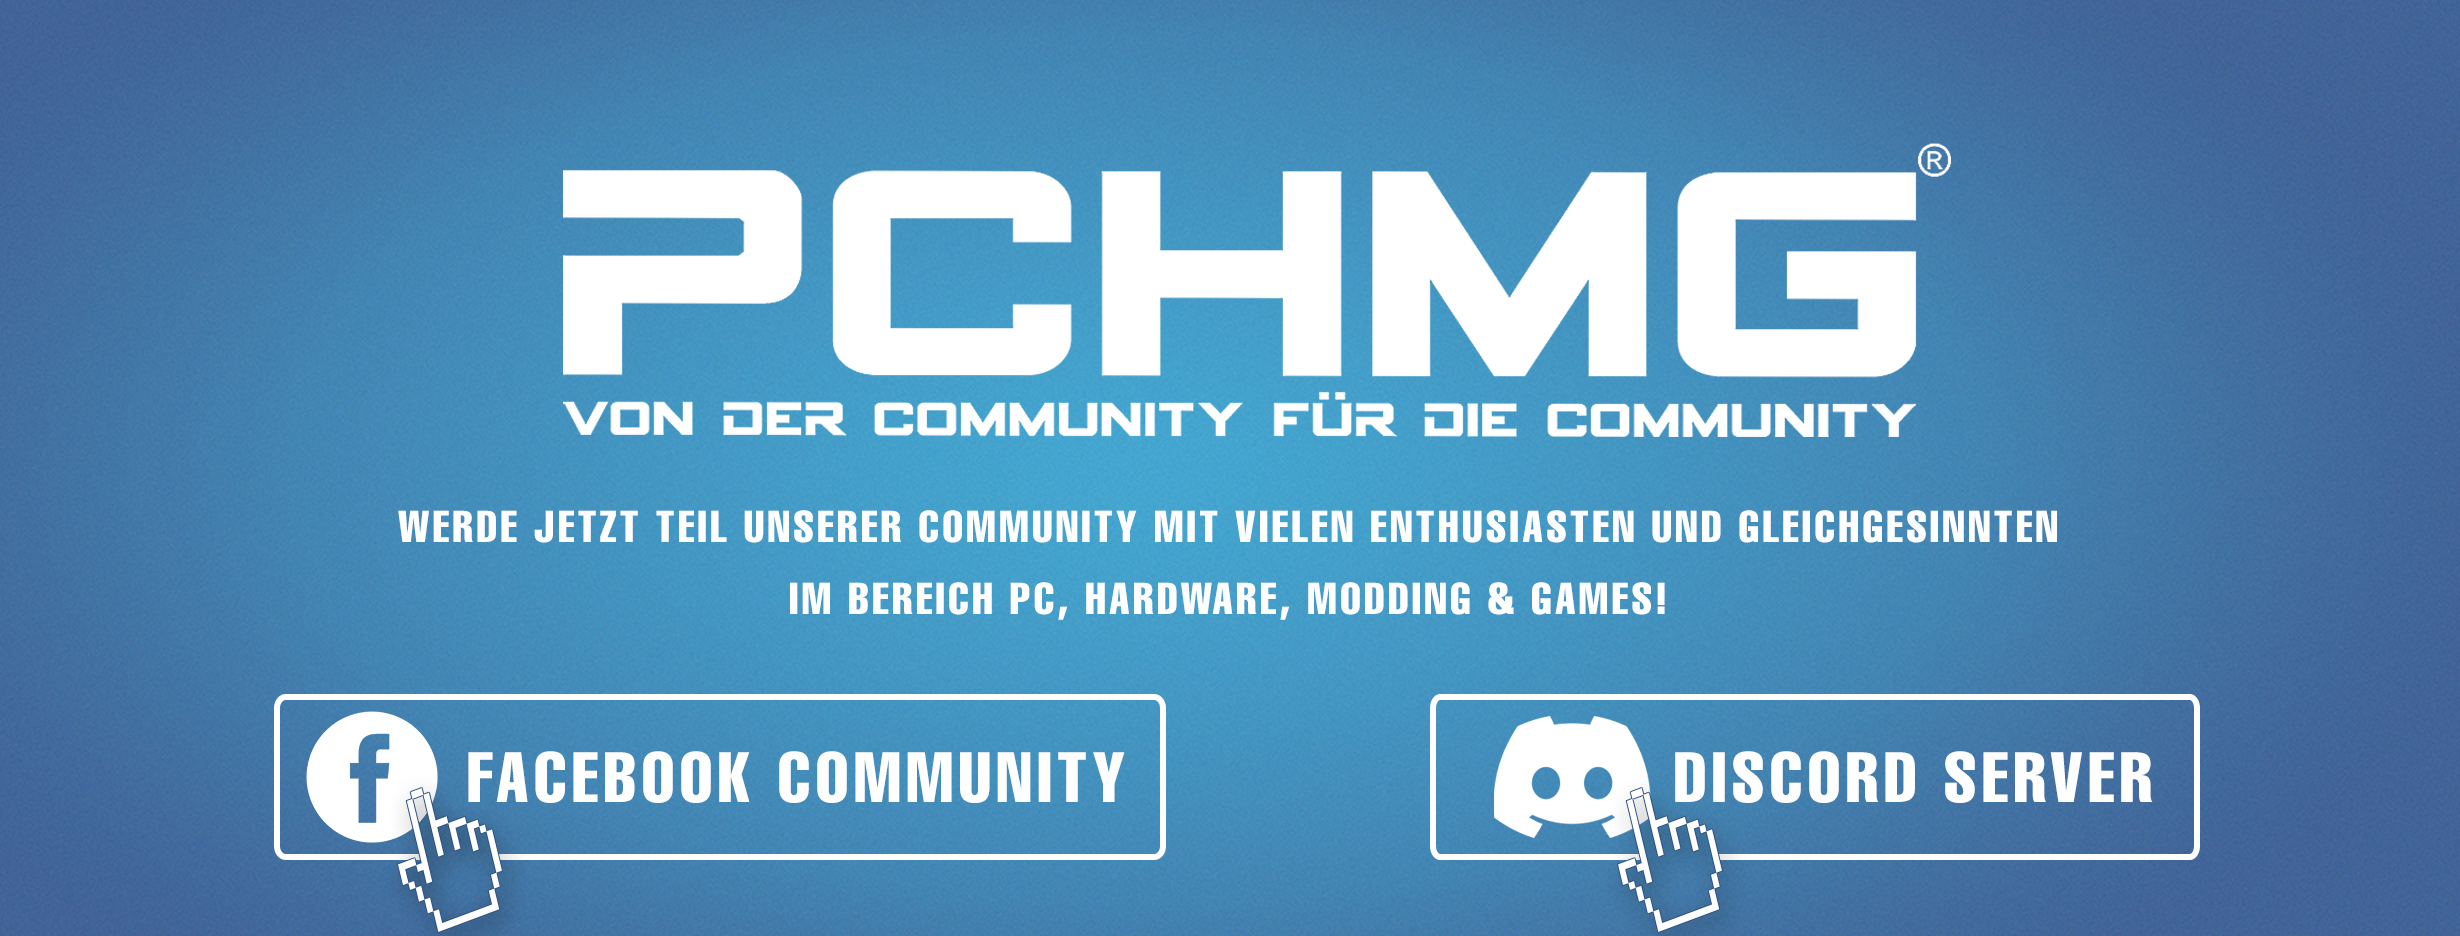 PCHMG Banner 3